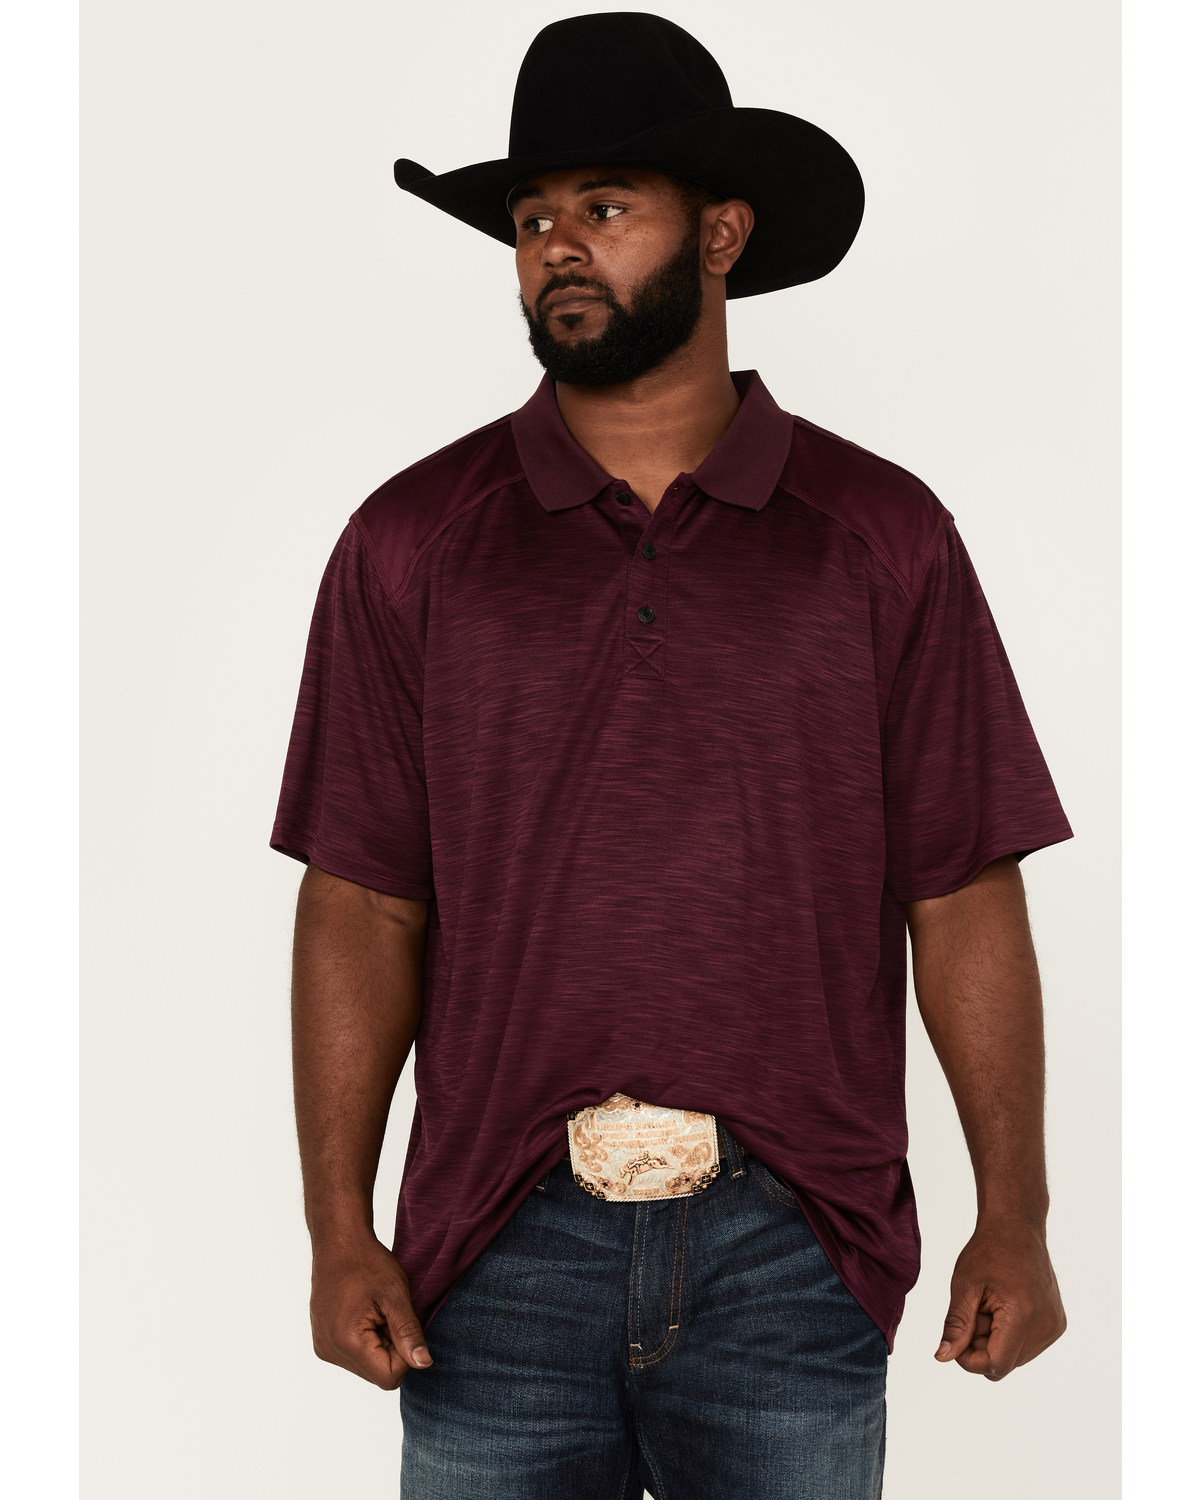 RANK 45® Men's Gazer Textured Solid Short Sleeve Polo Shirt